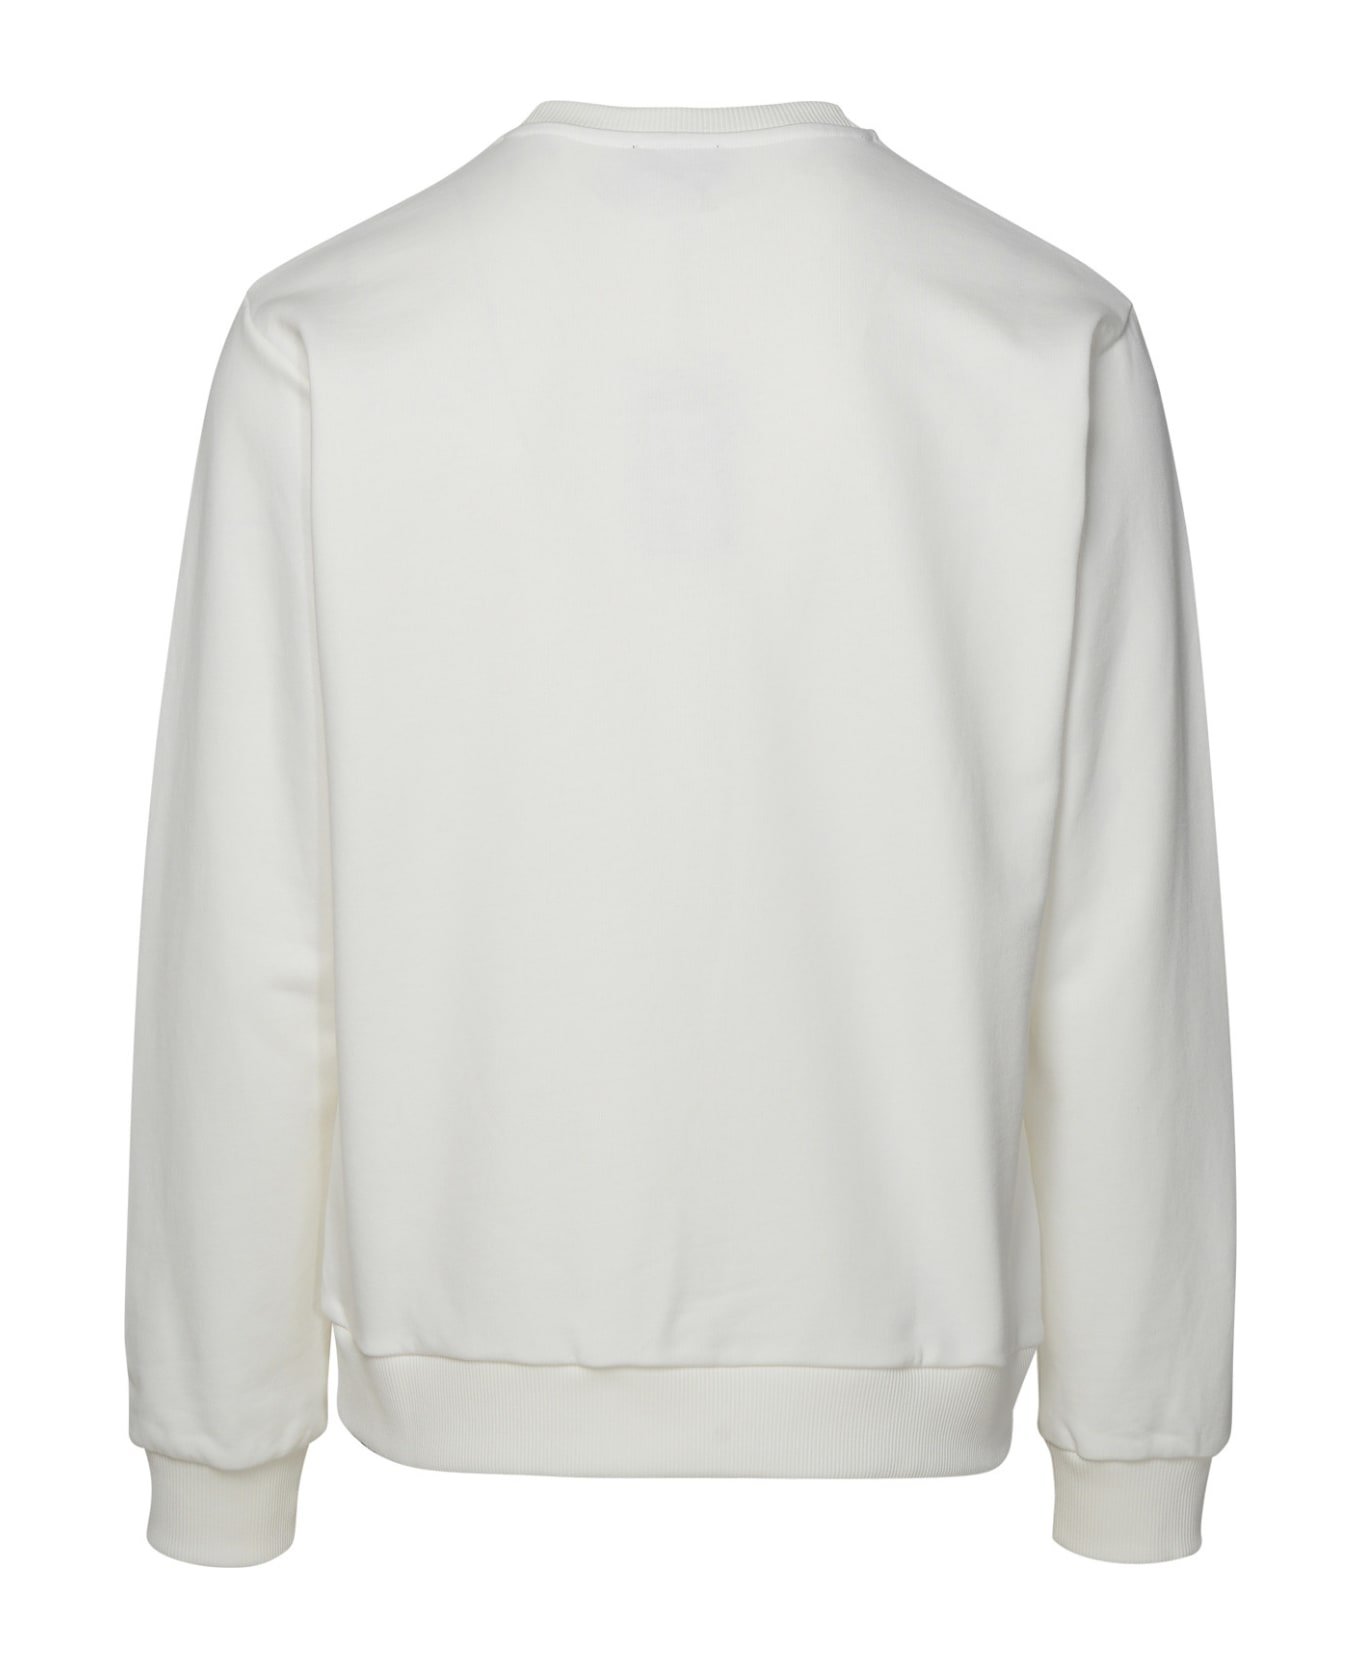 A.P.C. White Cotton Sweatshirt - White